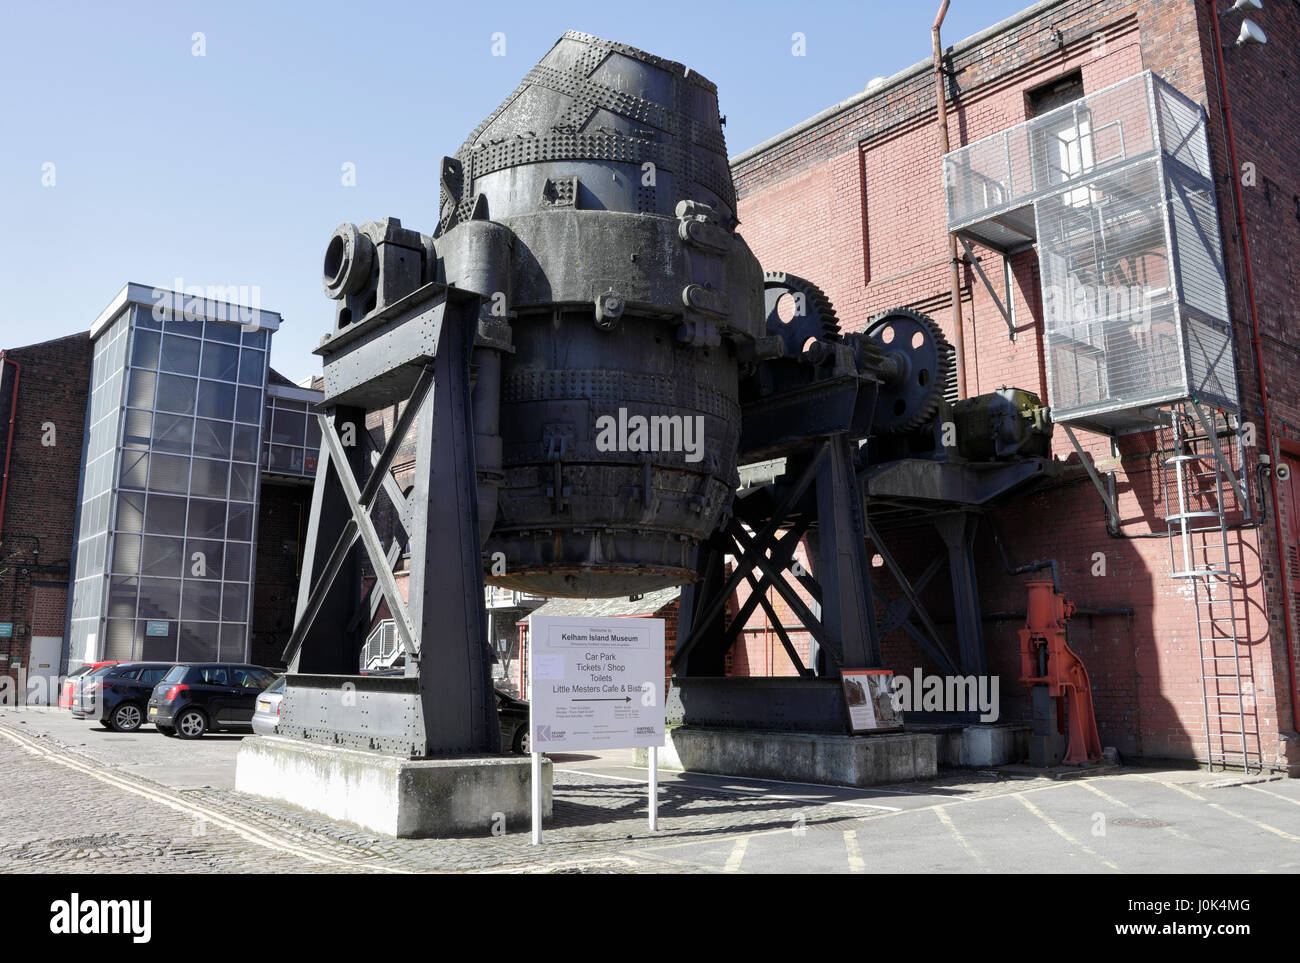 Bessemer converted steel making furnace at kelham Island Industrial museum in Sheffield England UK Stock Photo